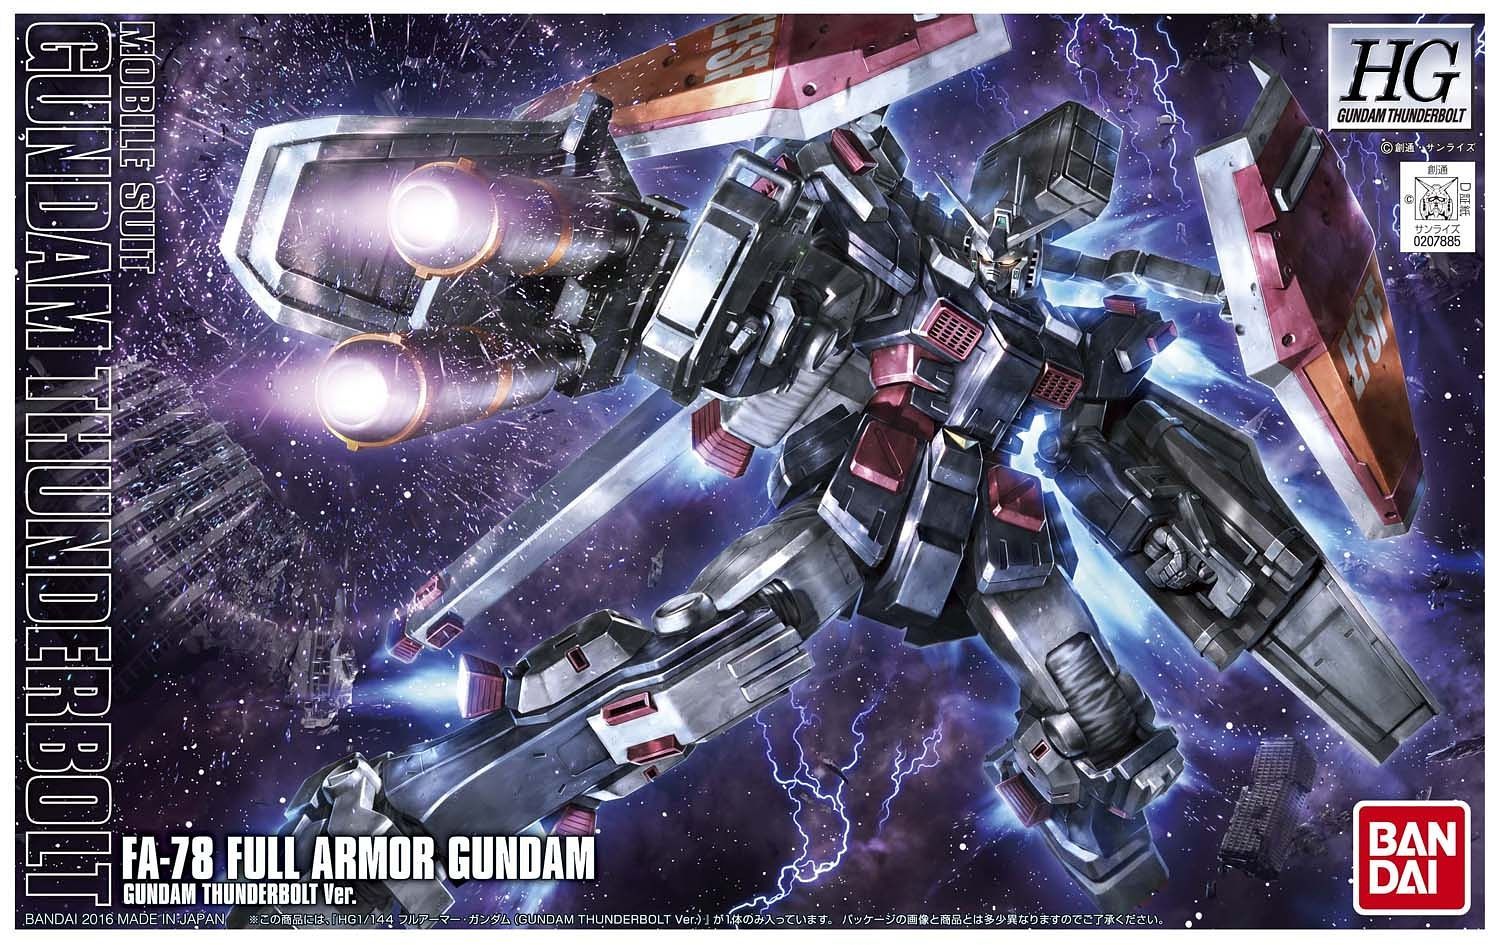 HG Gundam Full Armor (Gundam Thunderbolt Ver.) 1/144 - gundam-store.dk